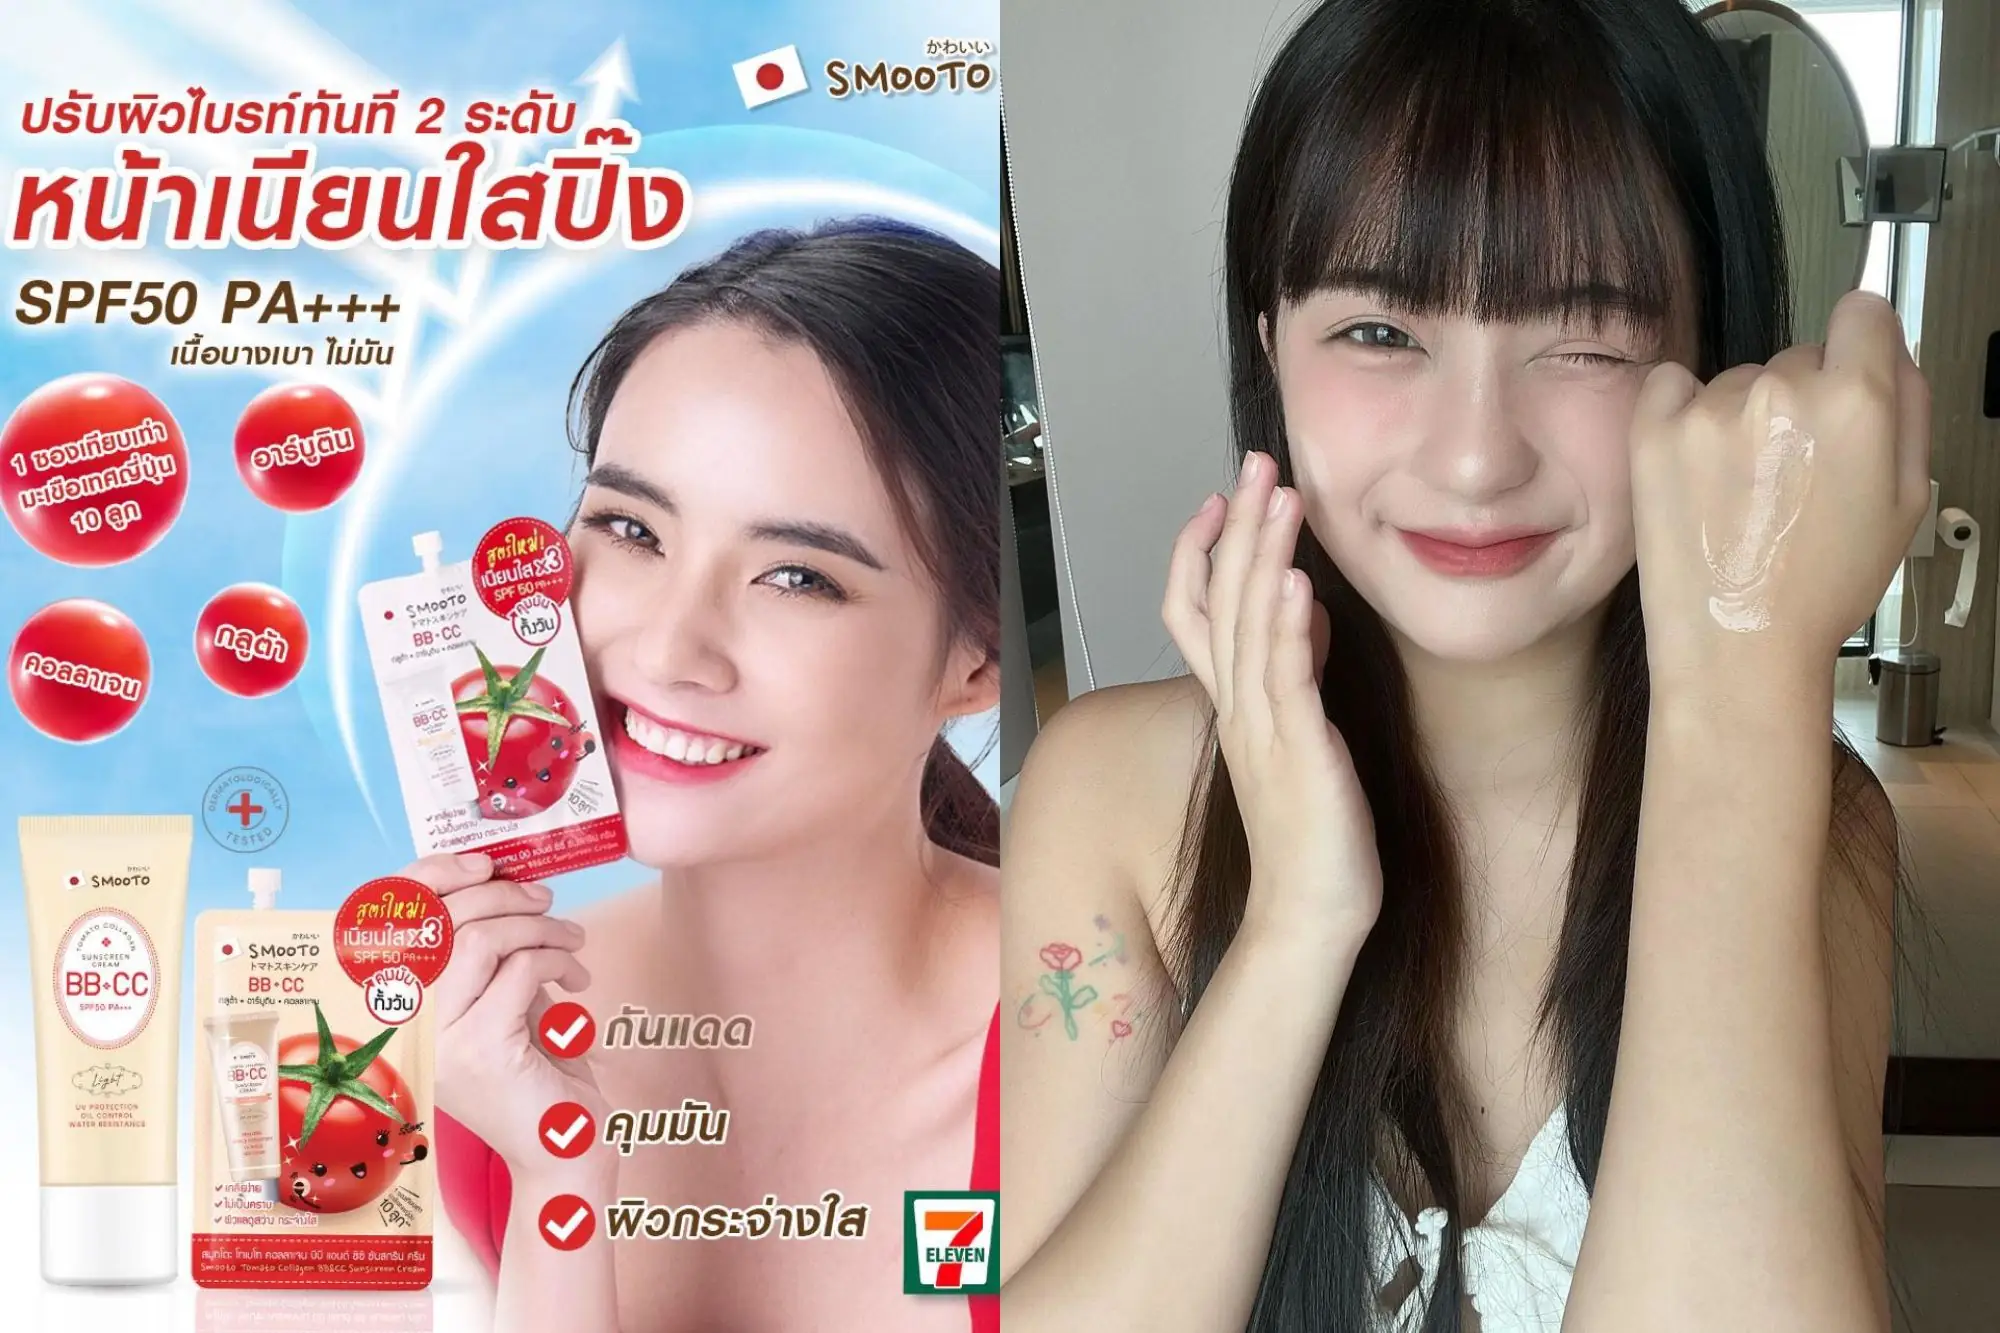 Smooto是許多網友在泰國7-11必買的熱門品牌！（圖片來源：官方FB）